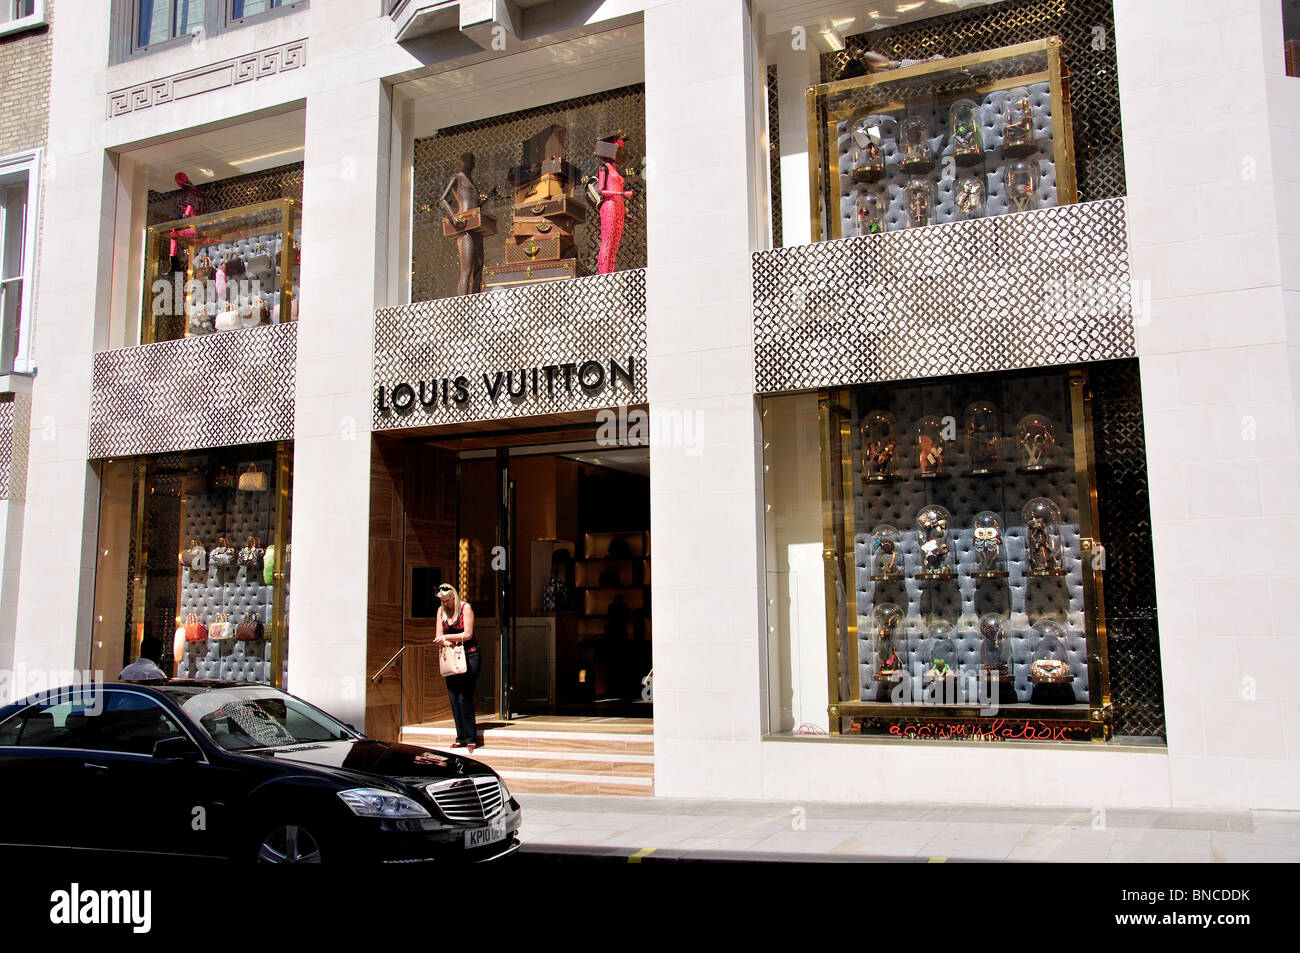 Louis Vuitton City store, United Kingdom